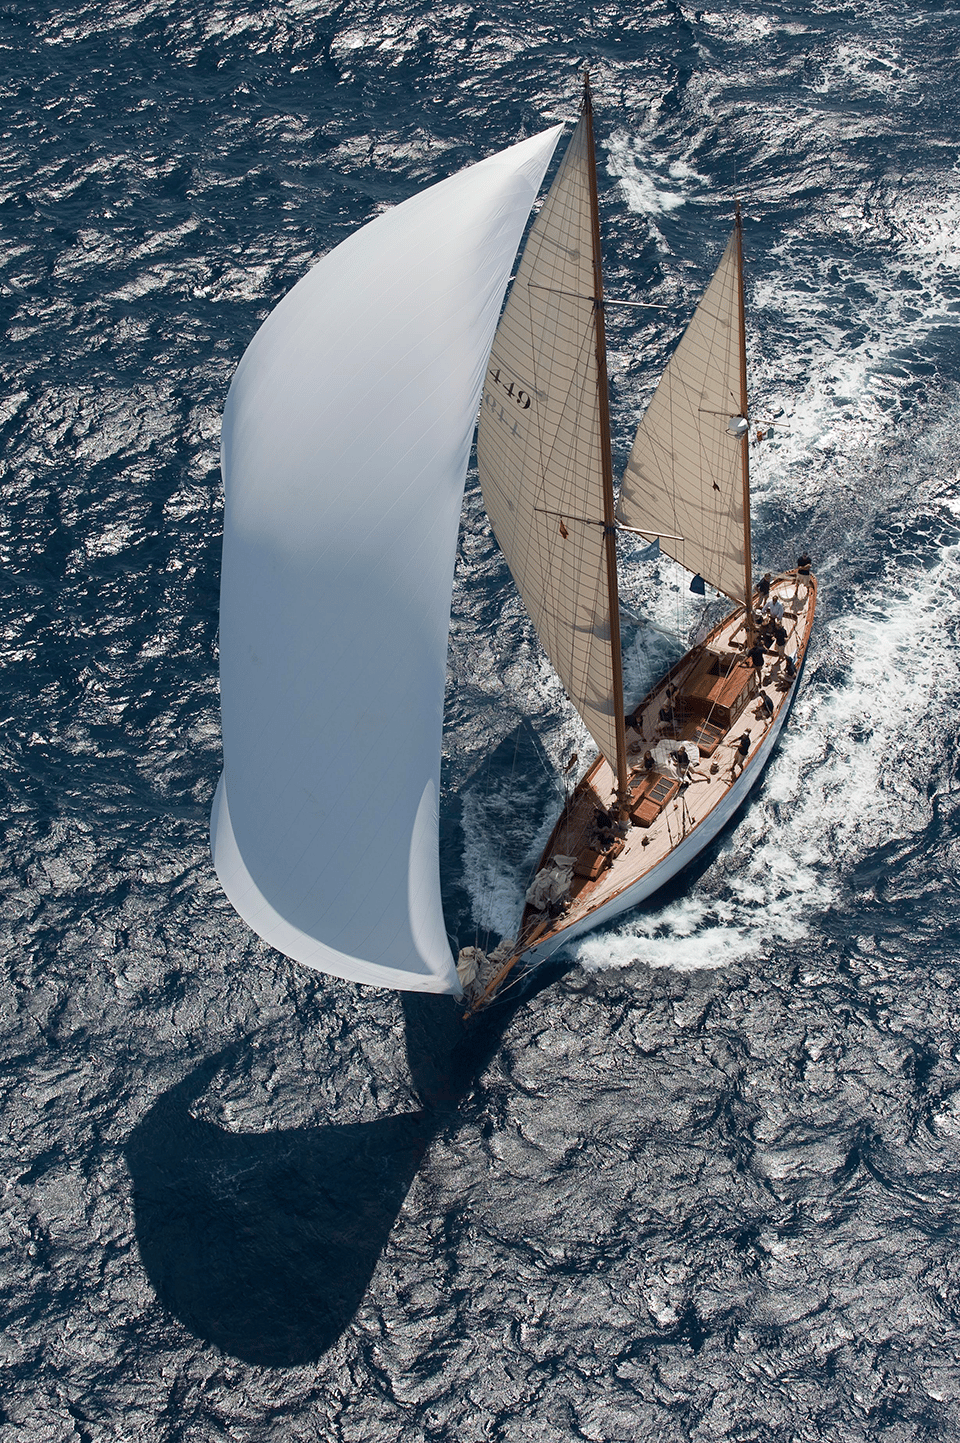 Panerai classic yachts